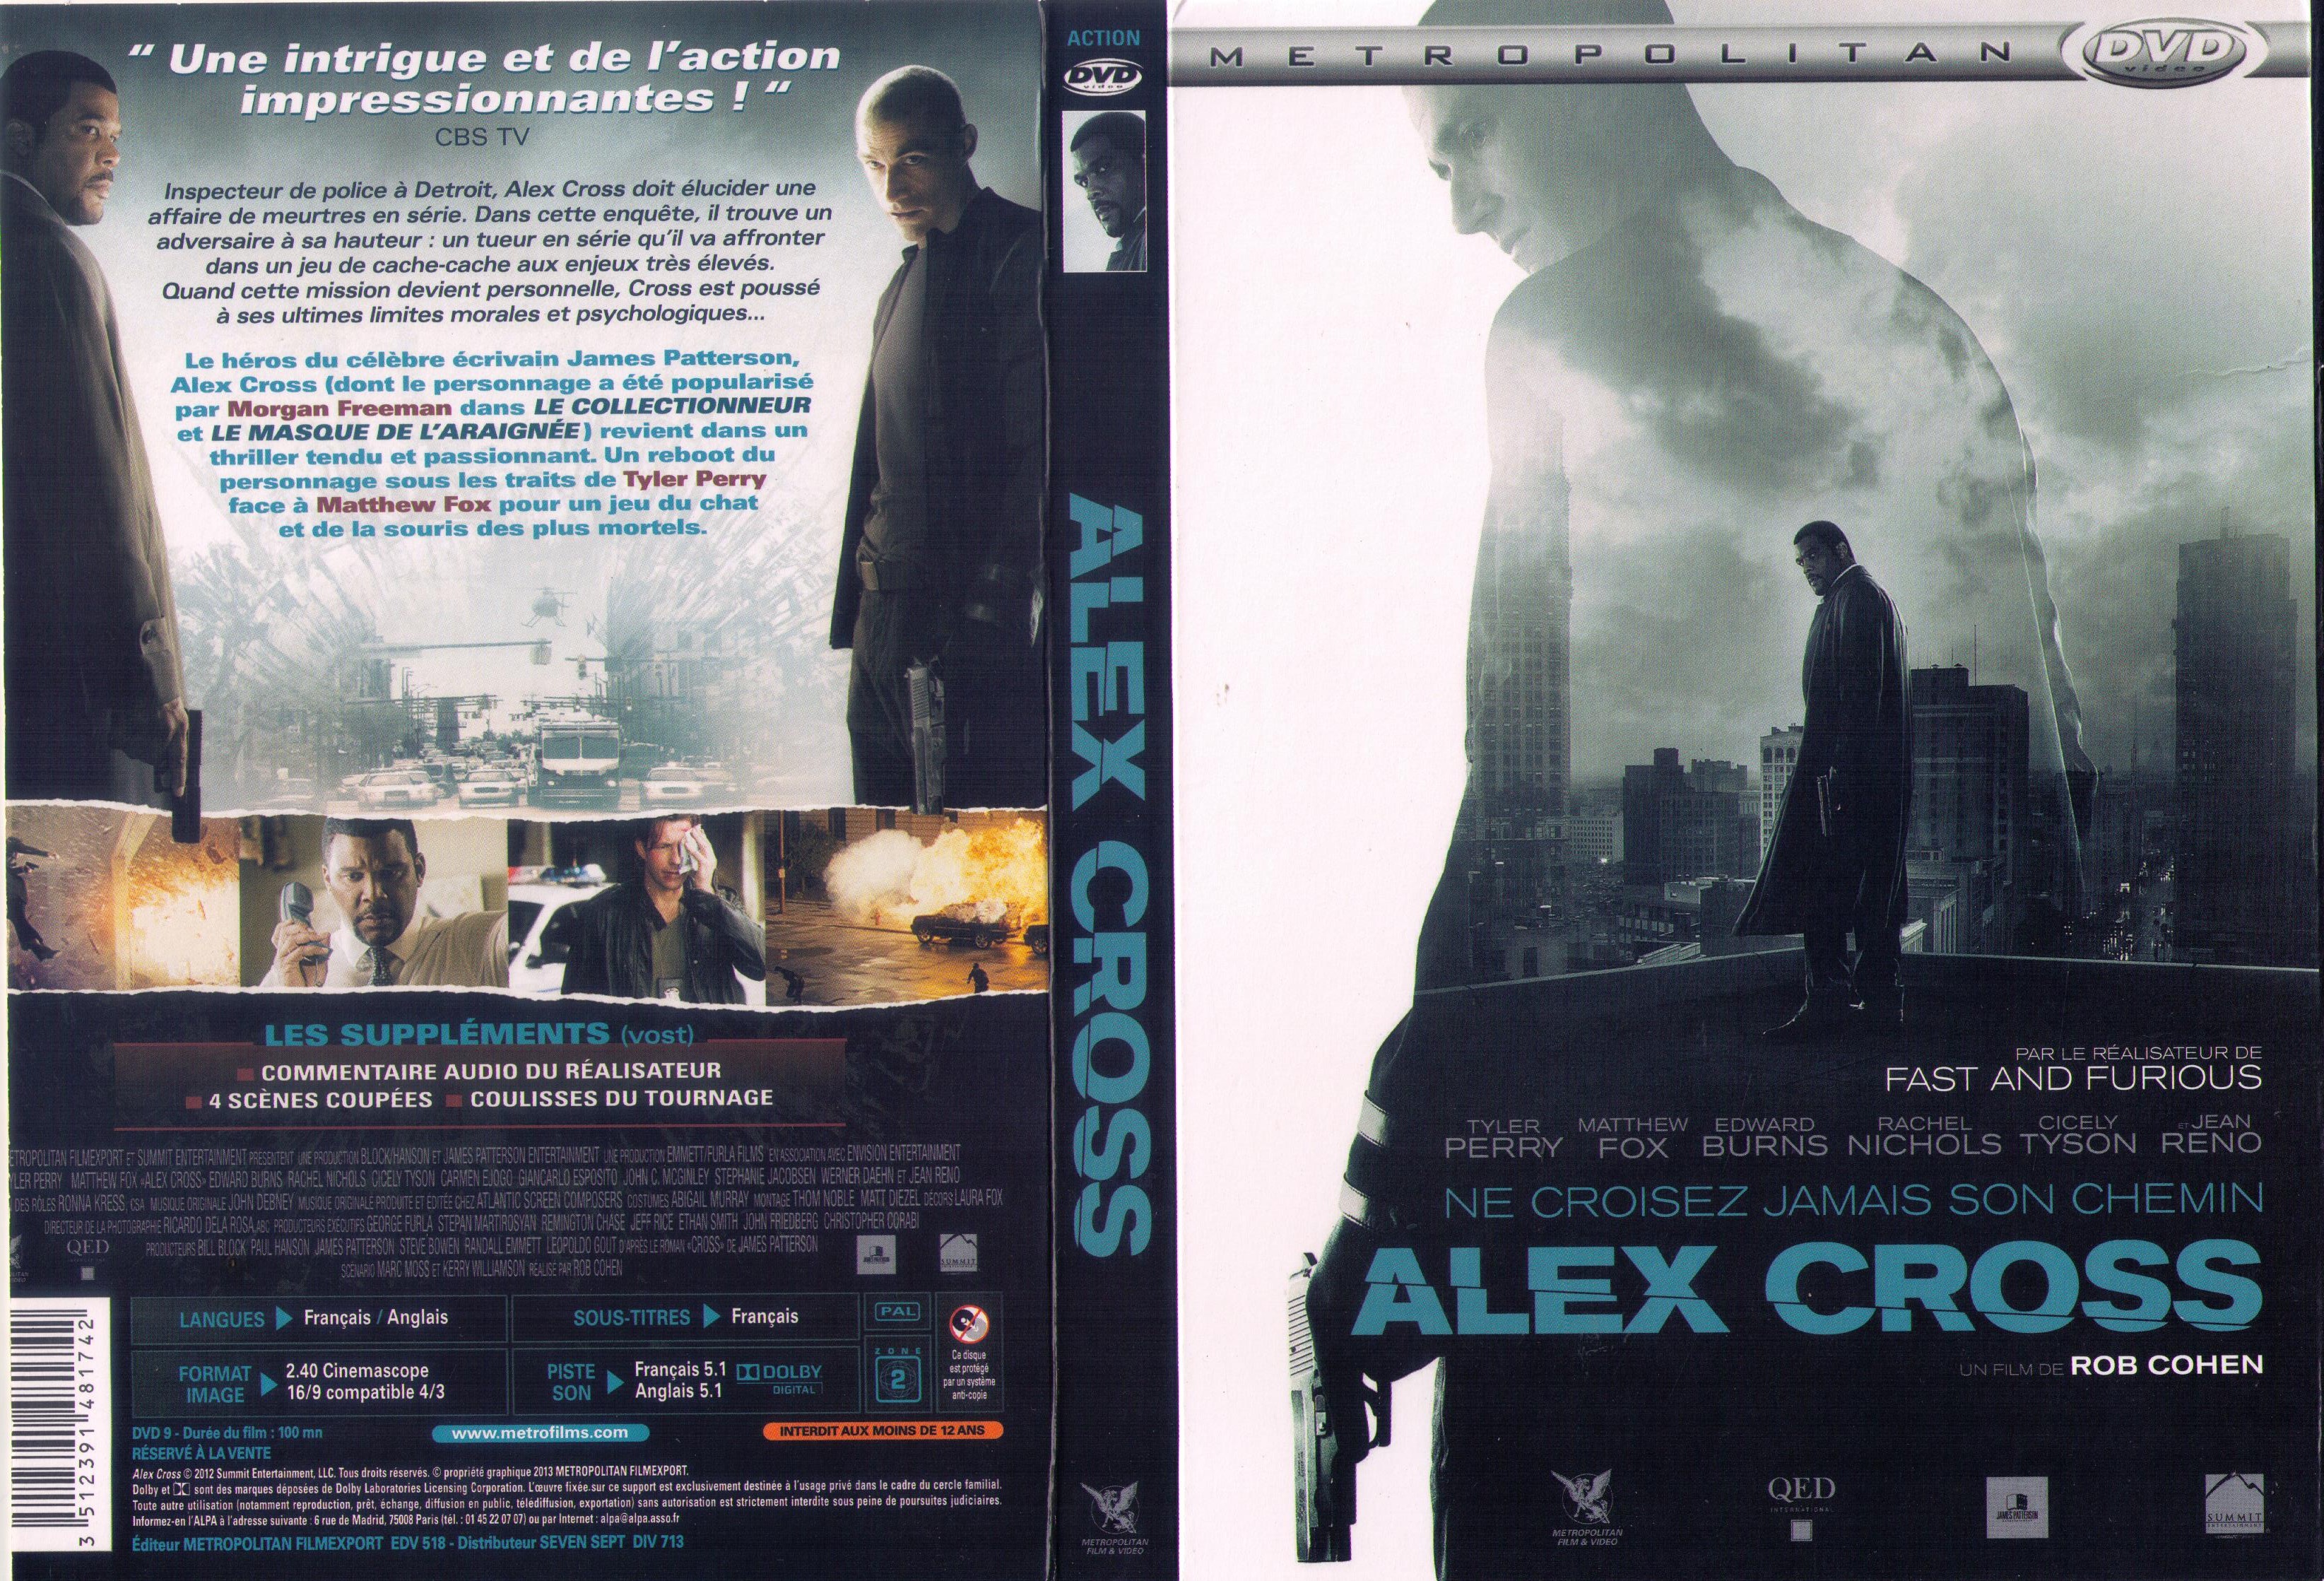 Jaquette DVD Alex Cross